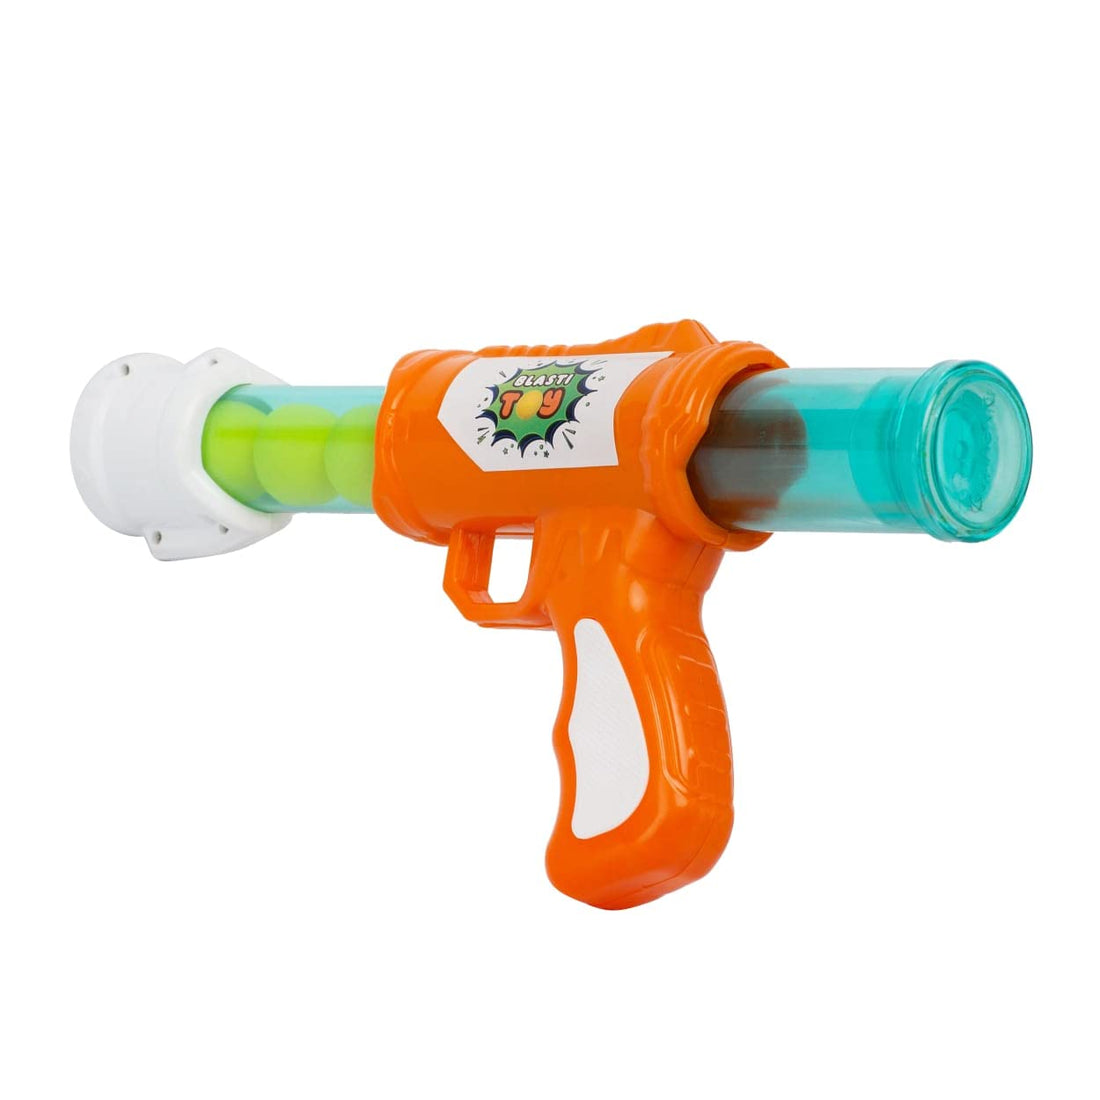 Attractive Gun with soft foam balls for kids